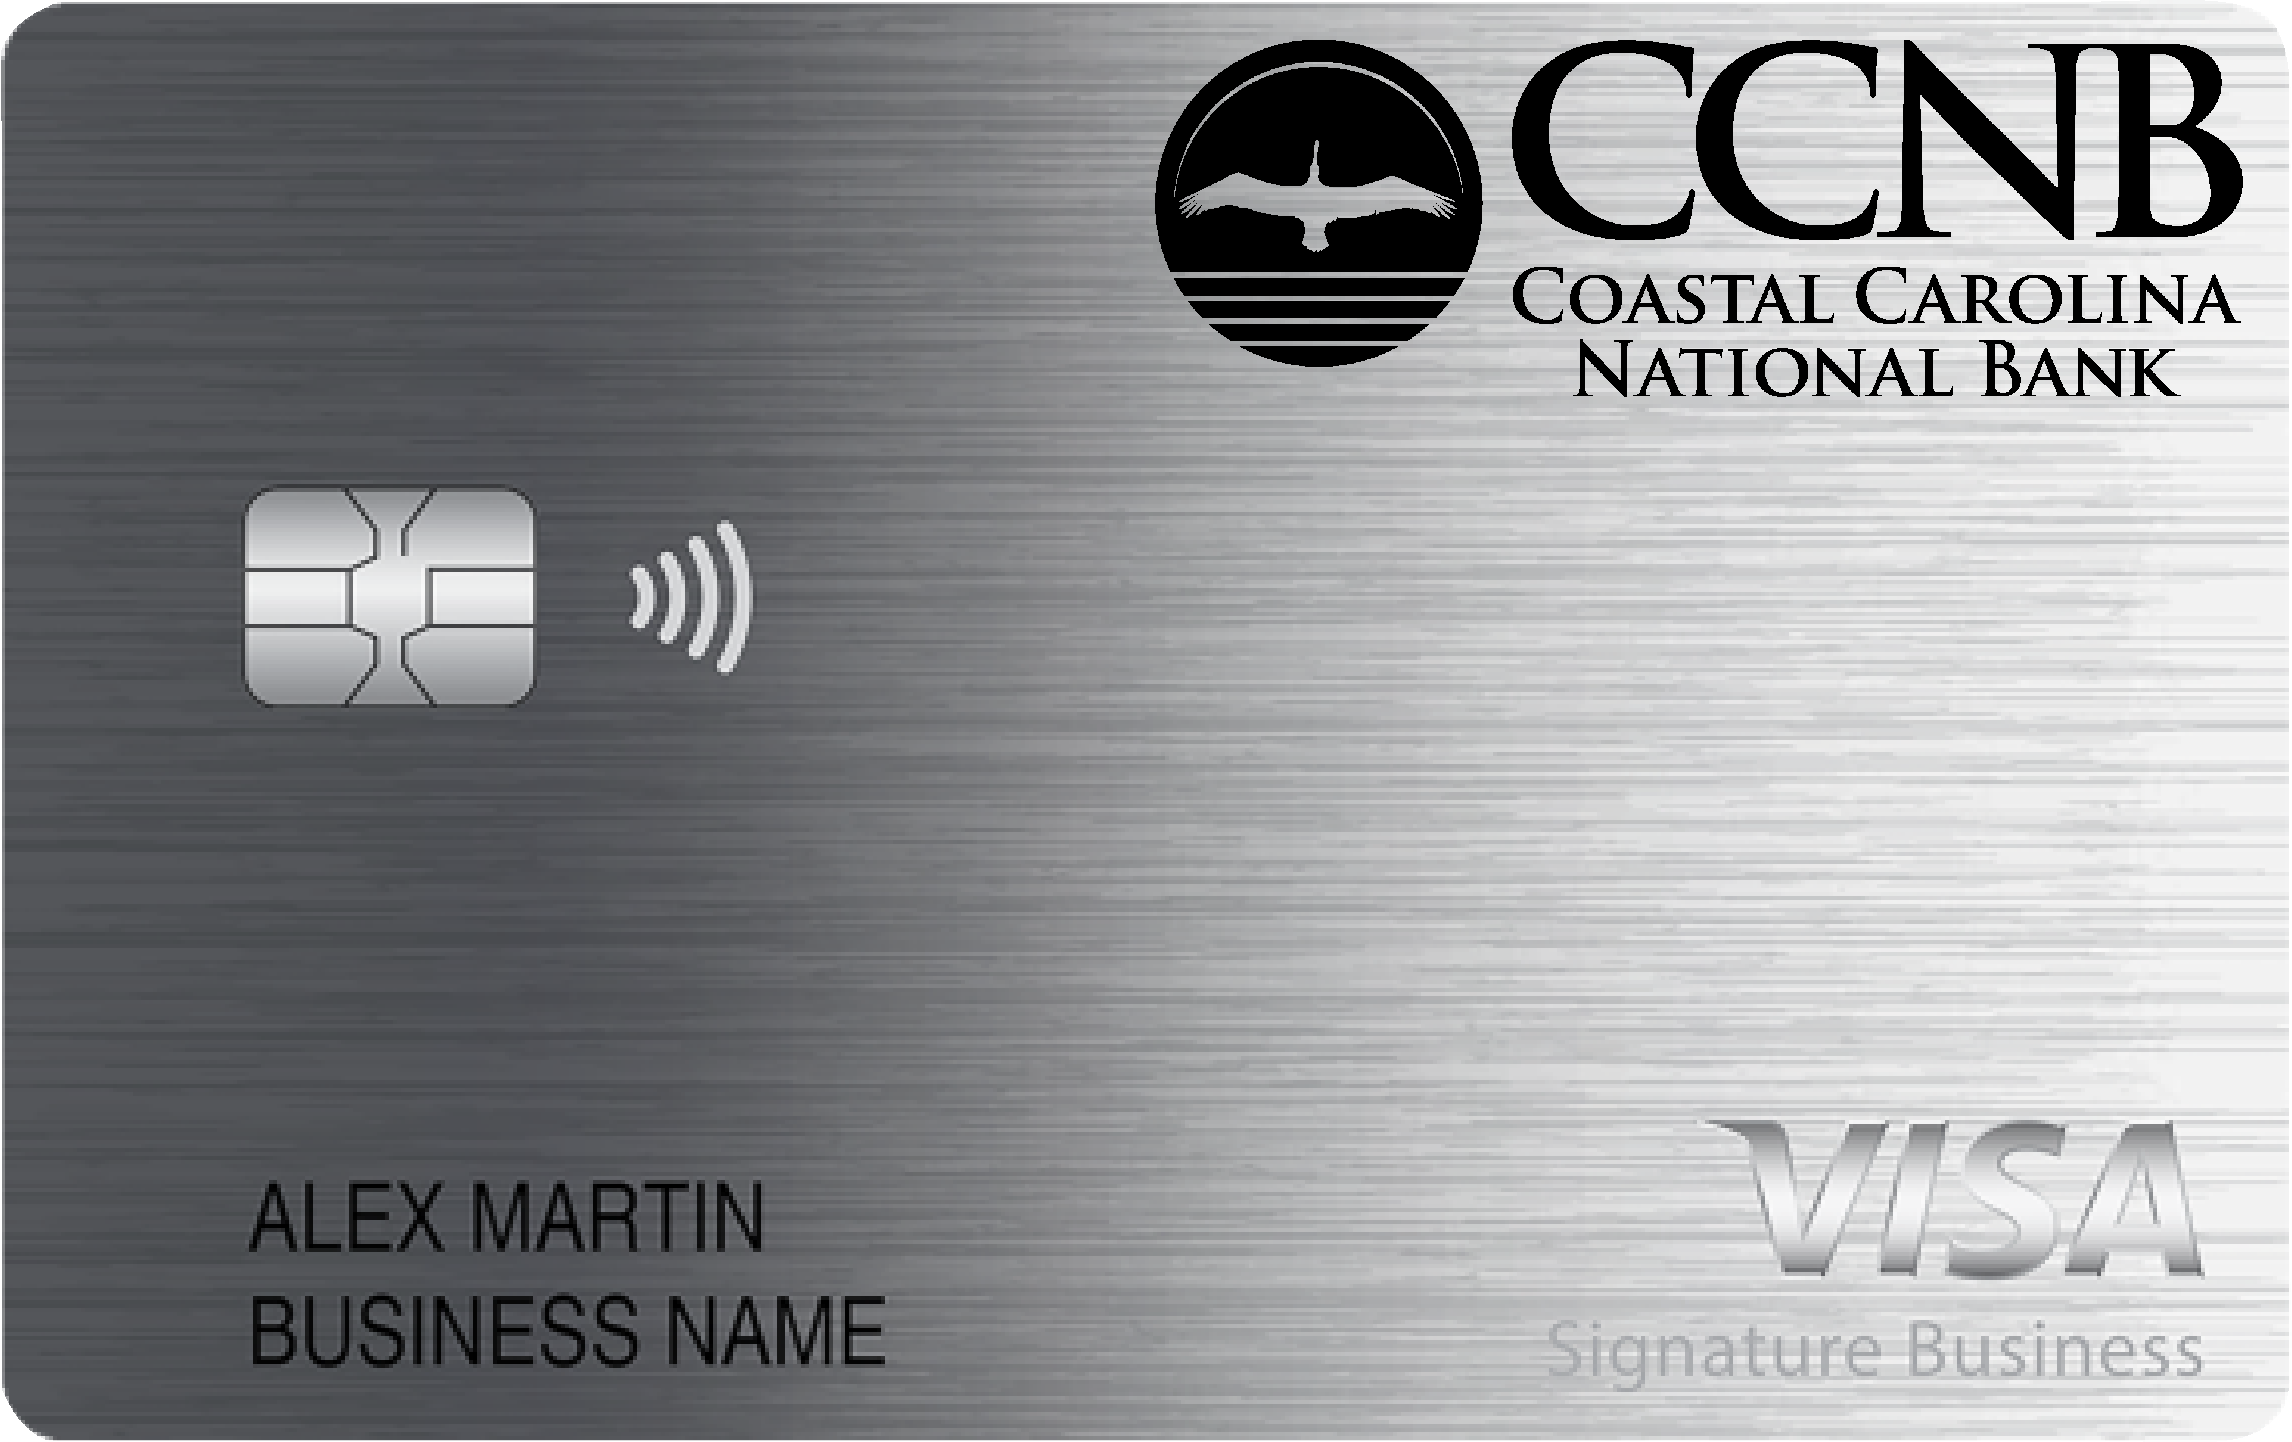 CCNB Smart Business Rewards Card